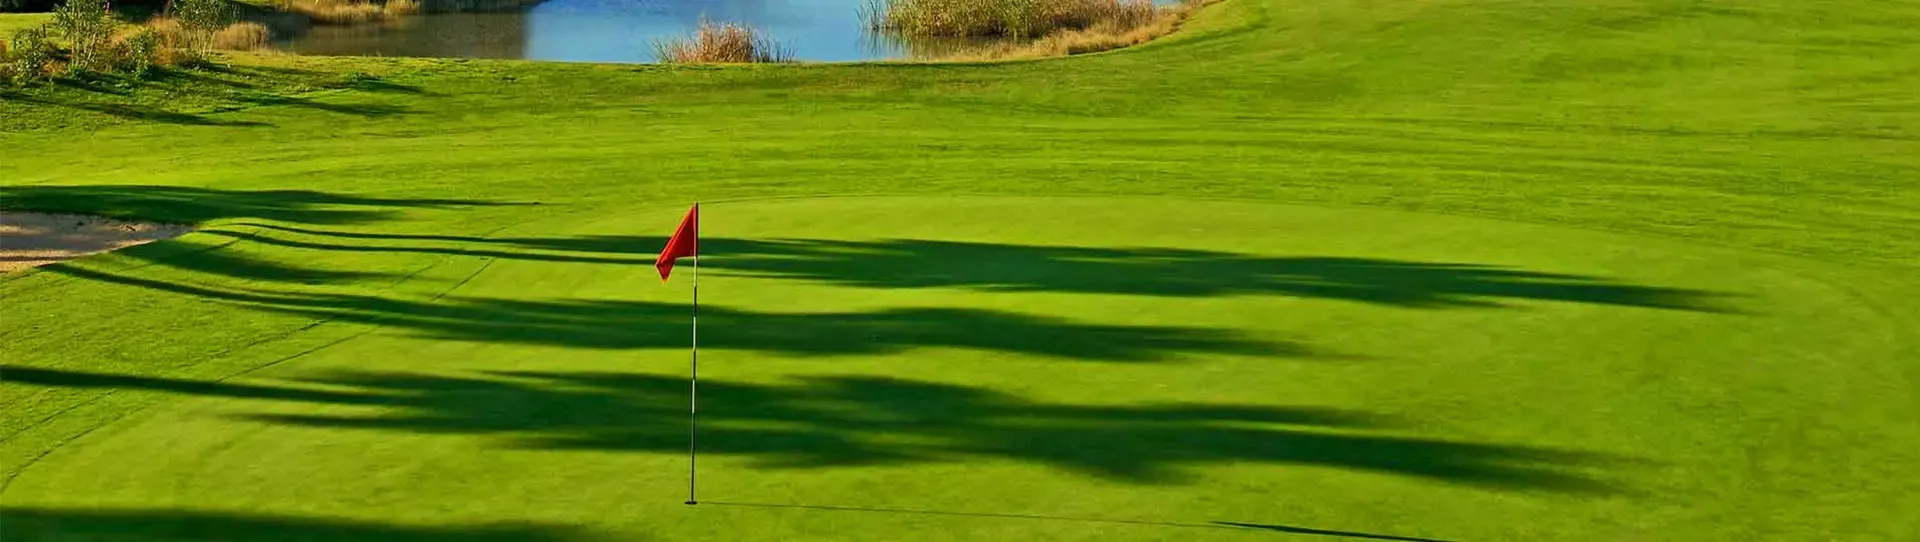 Spain golf courses - Real Novo Sancti Petri ''Pines & Sea'' - Photo 2